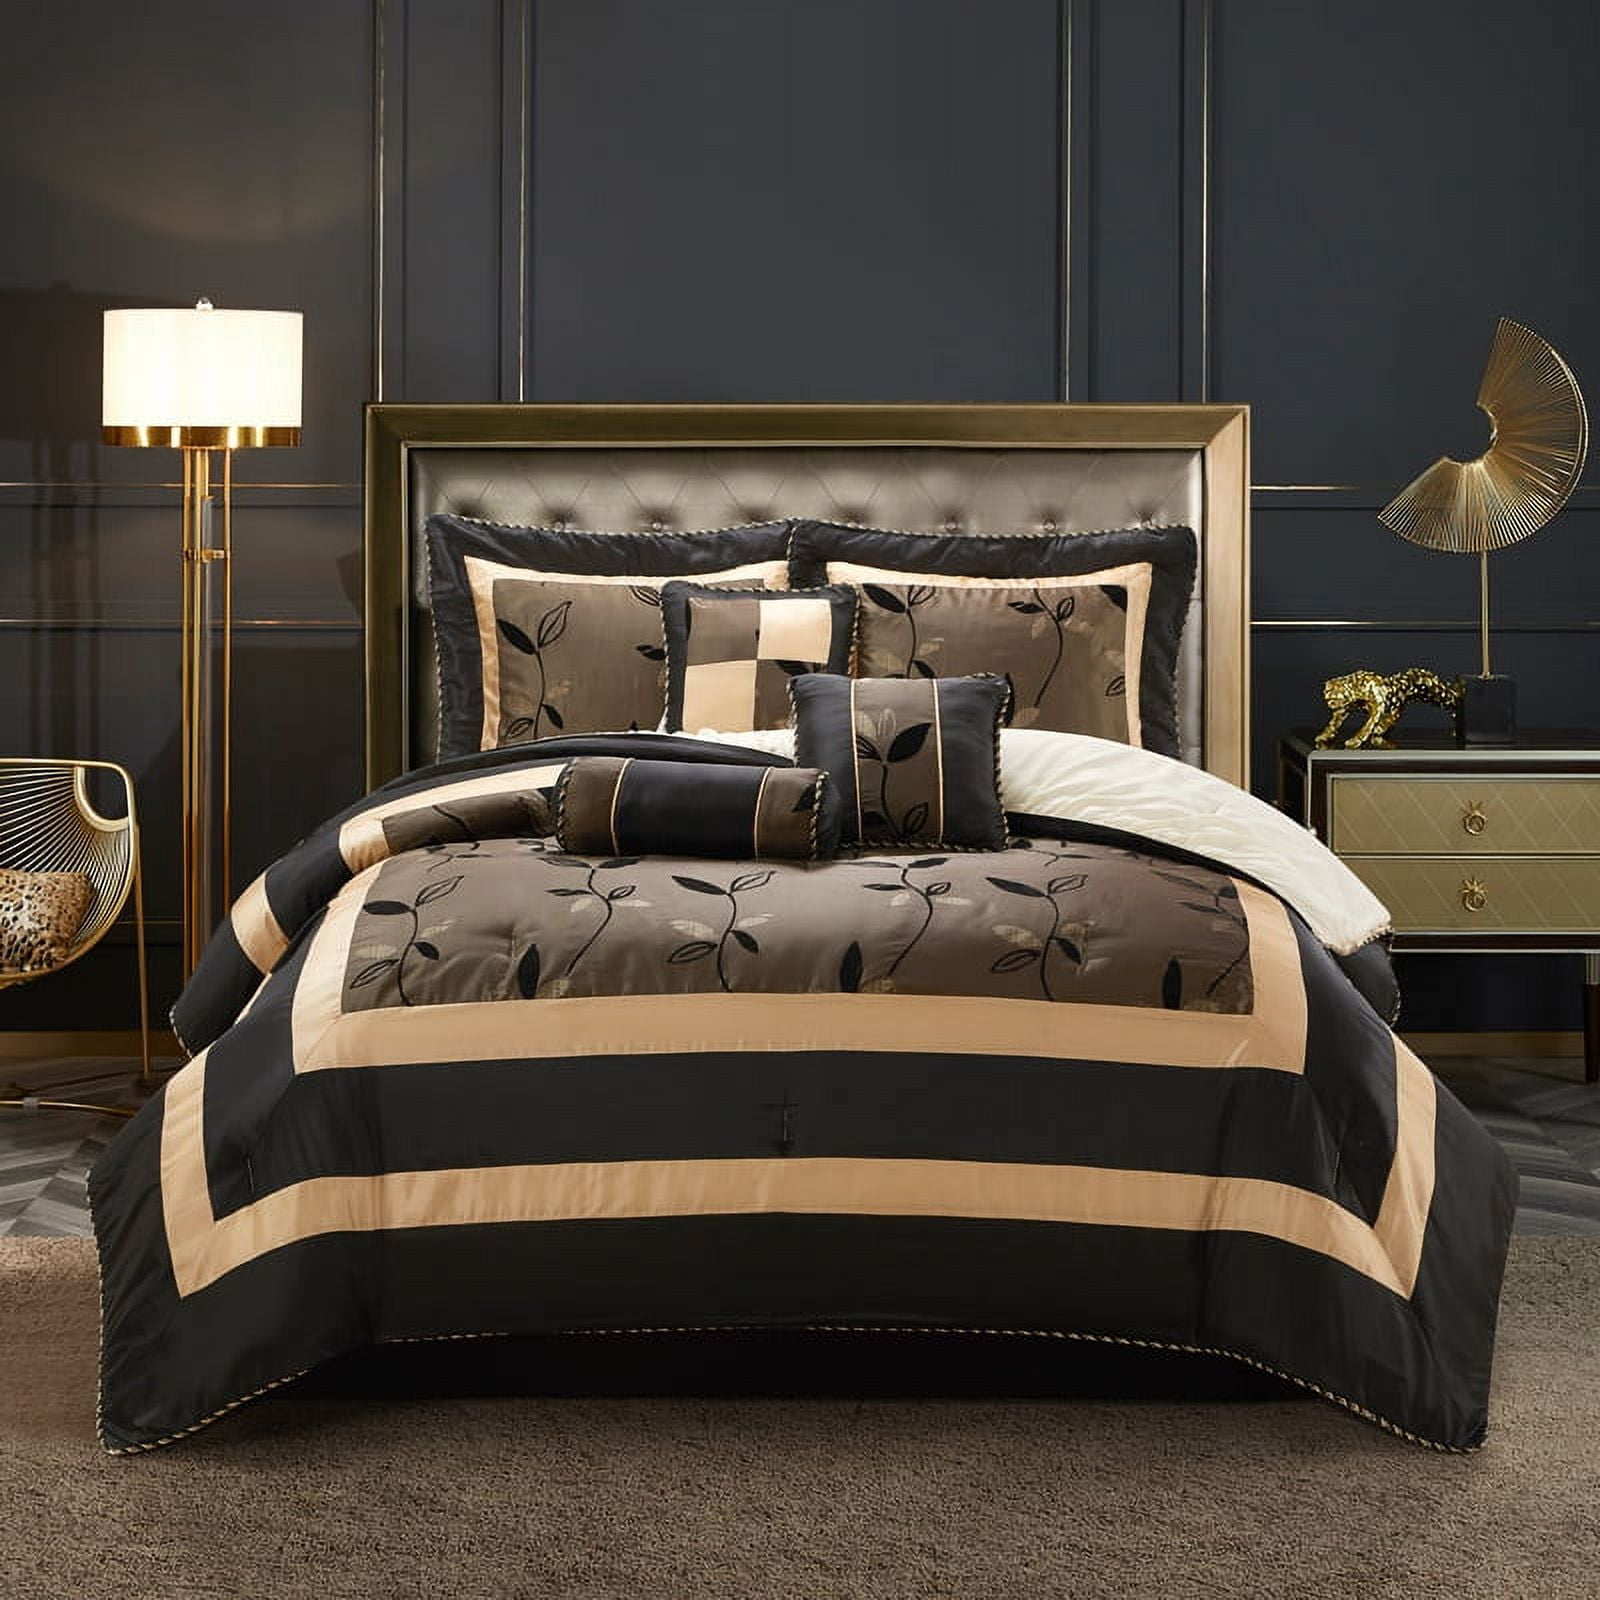 Lanco Arielle Classic Floral 7-Piece Bedroom Bedding Comforter Set,  Bronze/Brown Black Beige, Bed Size Queen, 100% Polyester Fill